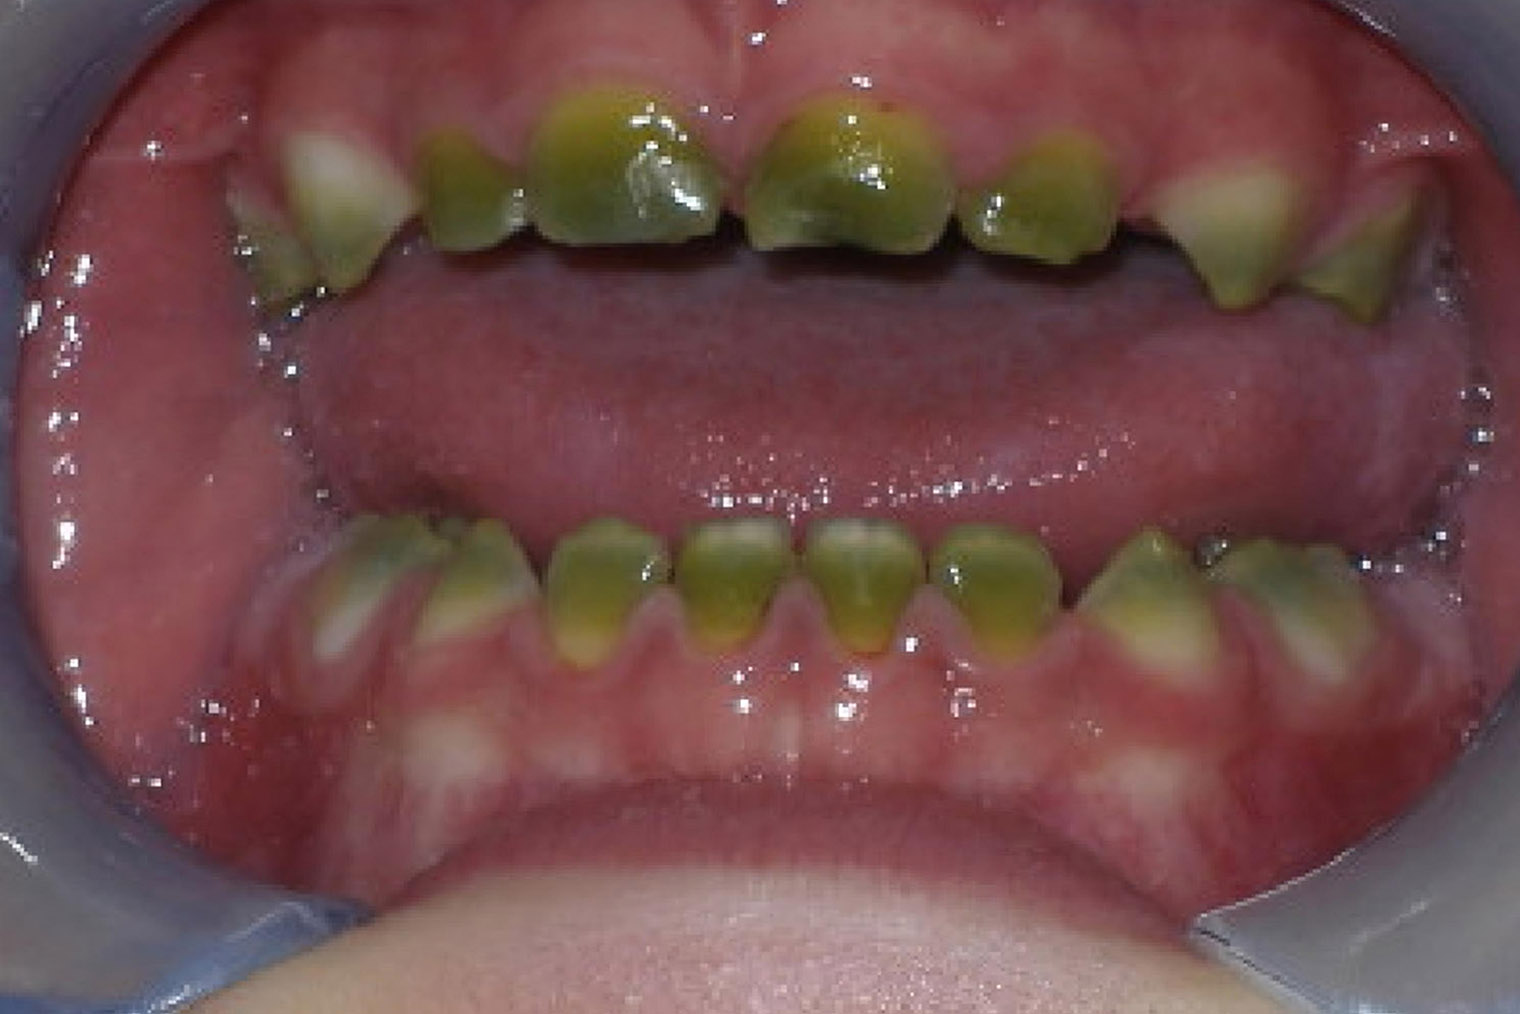 Желто-зеленые зубы младенца, который болел желтухой. Источник: researchgate.net